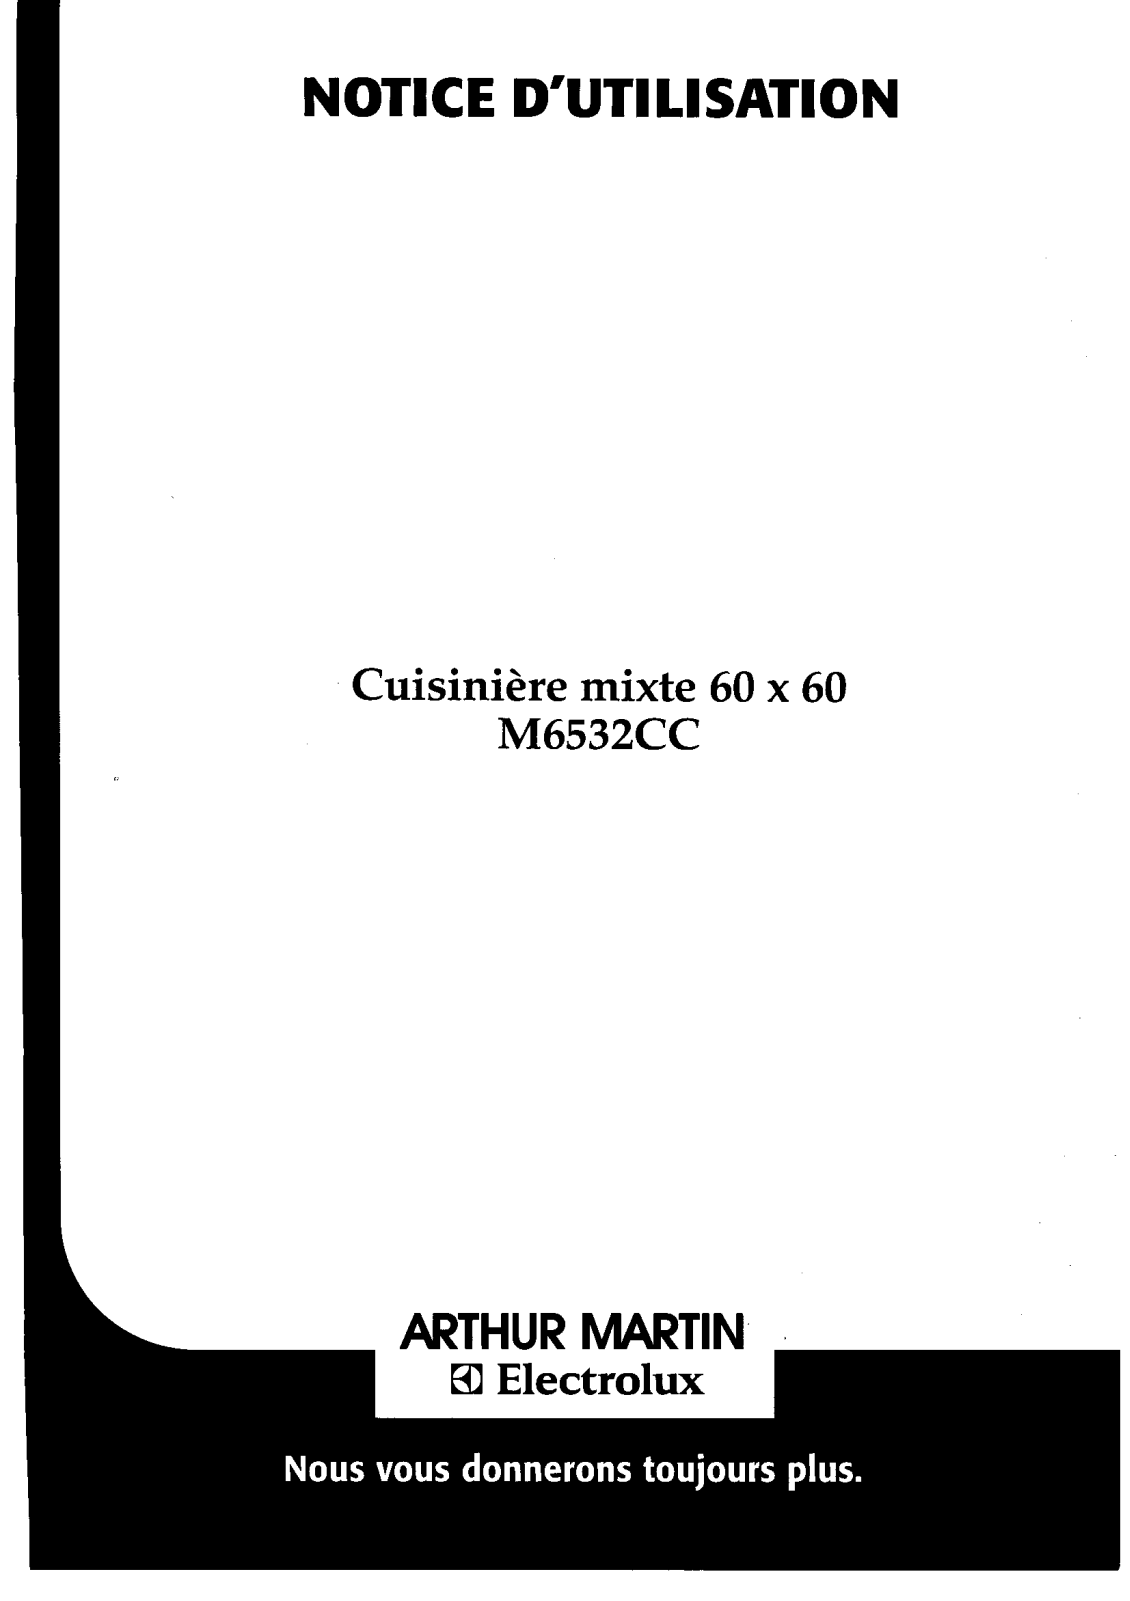 Arthur martin M6532CC User Manual